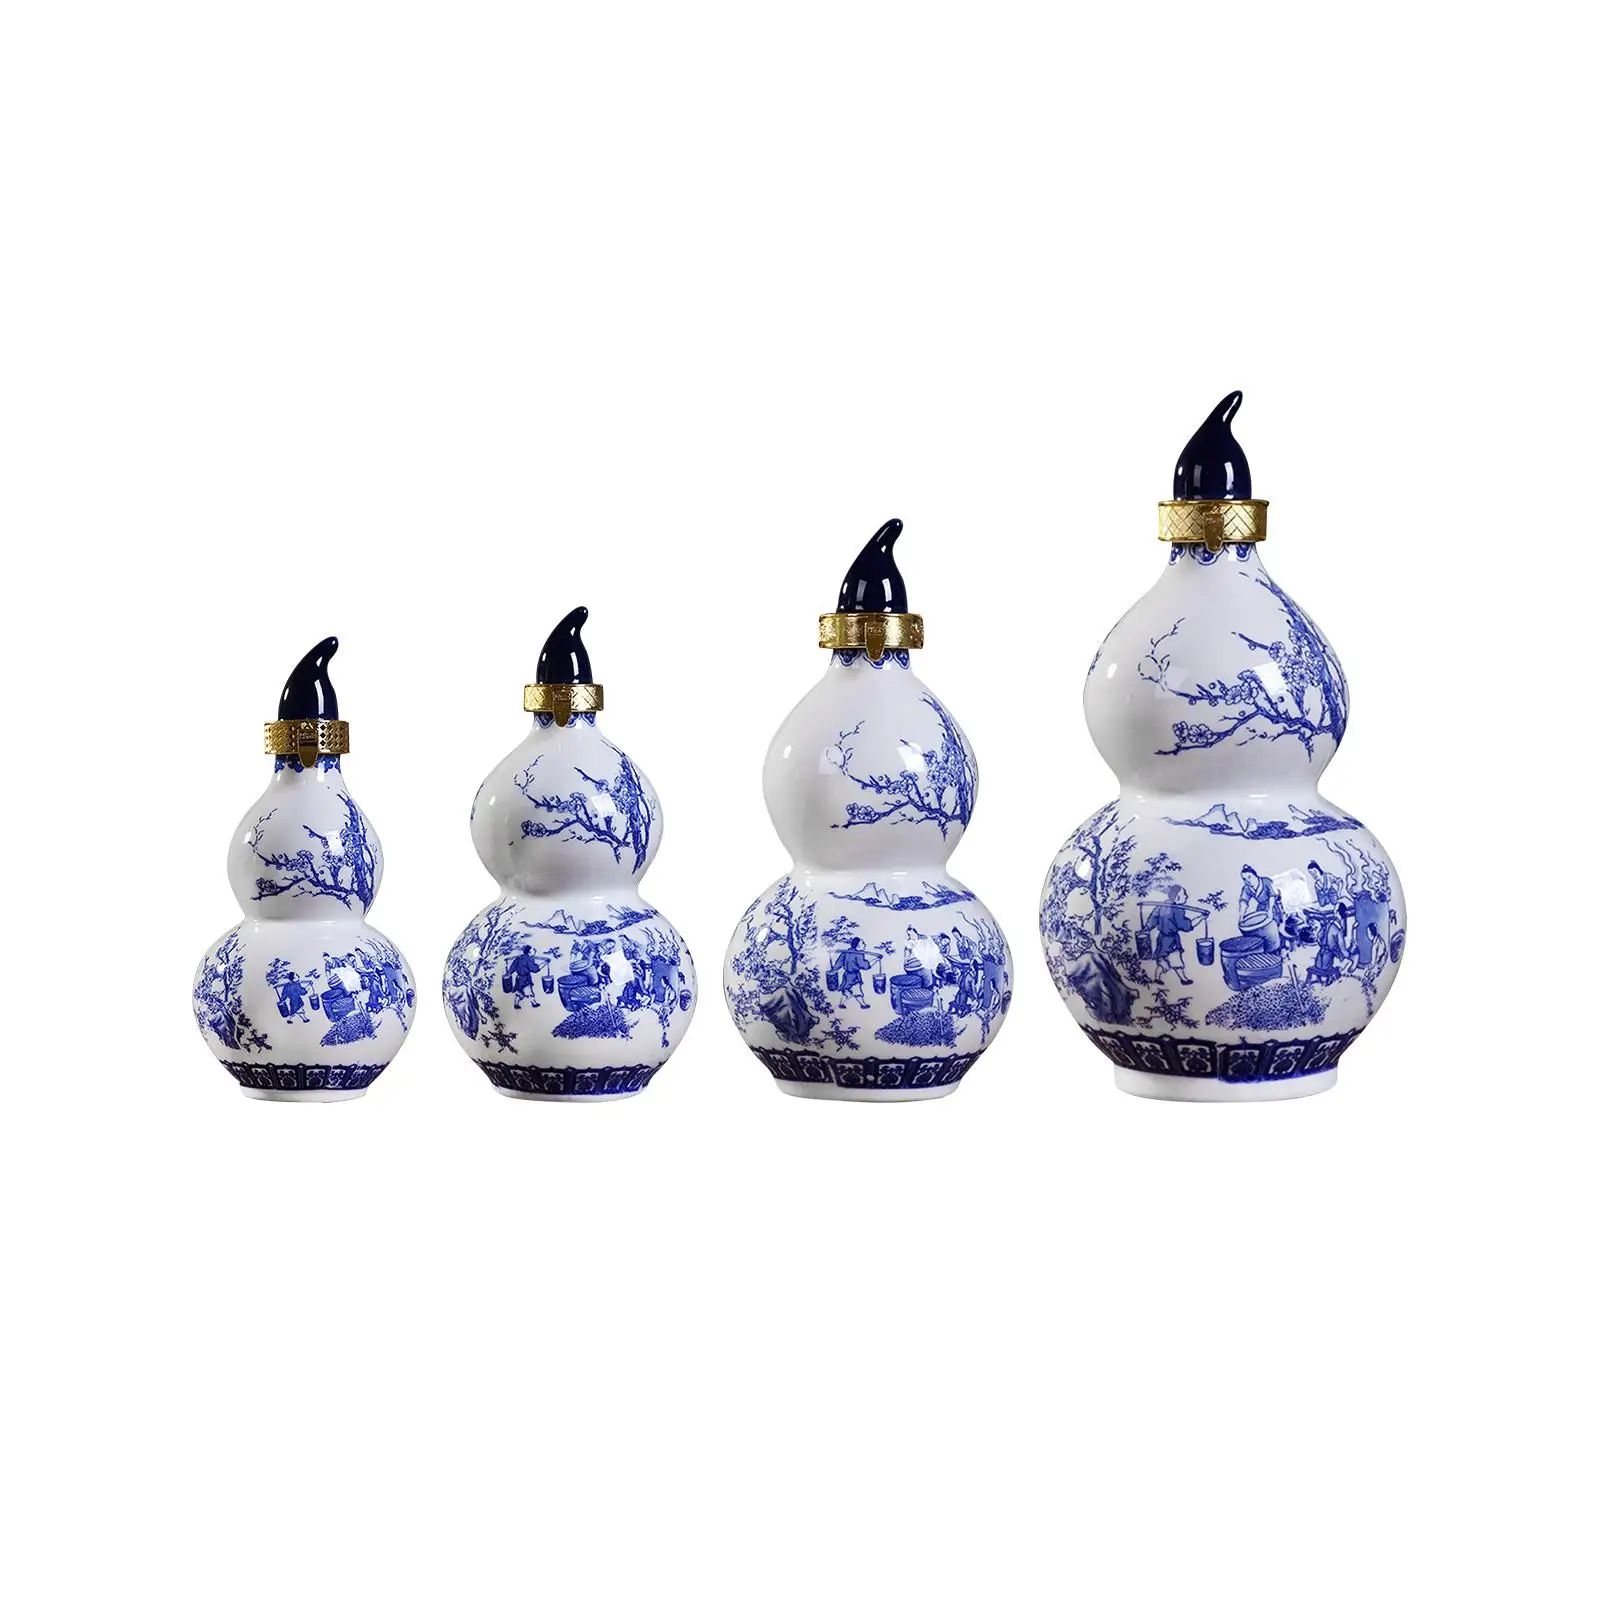 Drinking Gourd Chinese Feng Shui Gourd Ornament Ceramic Gourd Water Bottle for Drinks Holder Home Indoor Hotels Decor